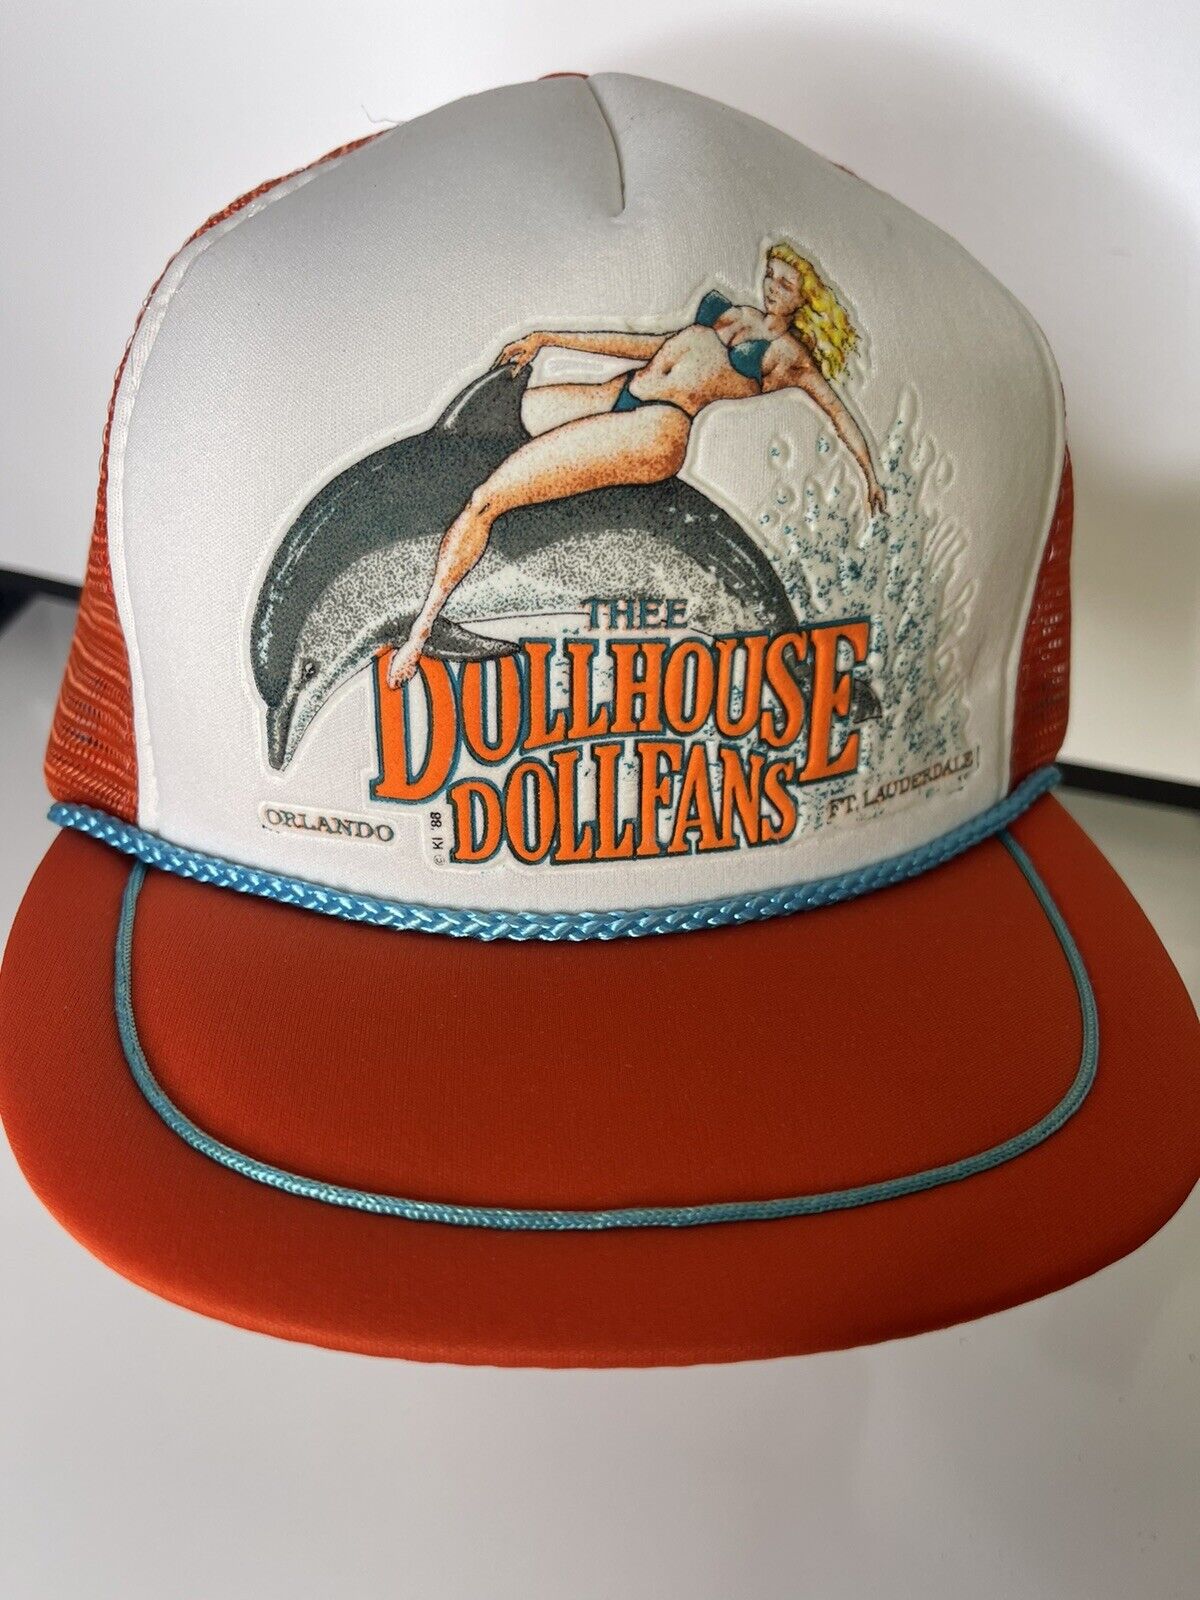 Vintage 1980s Thee Dollhouse Dollfans Strip Club Hat Ft Lauderdale Orlando FL